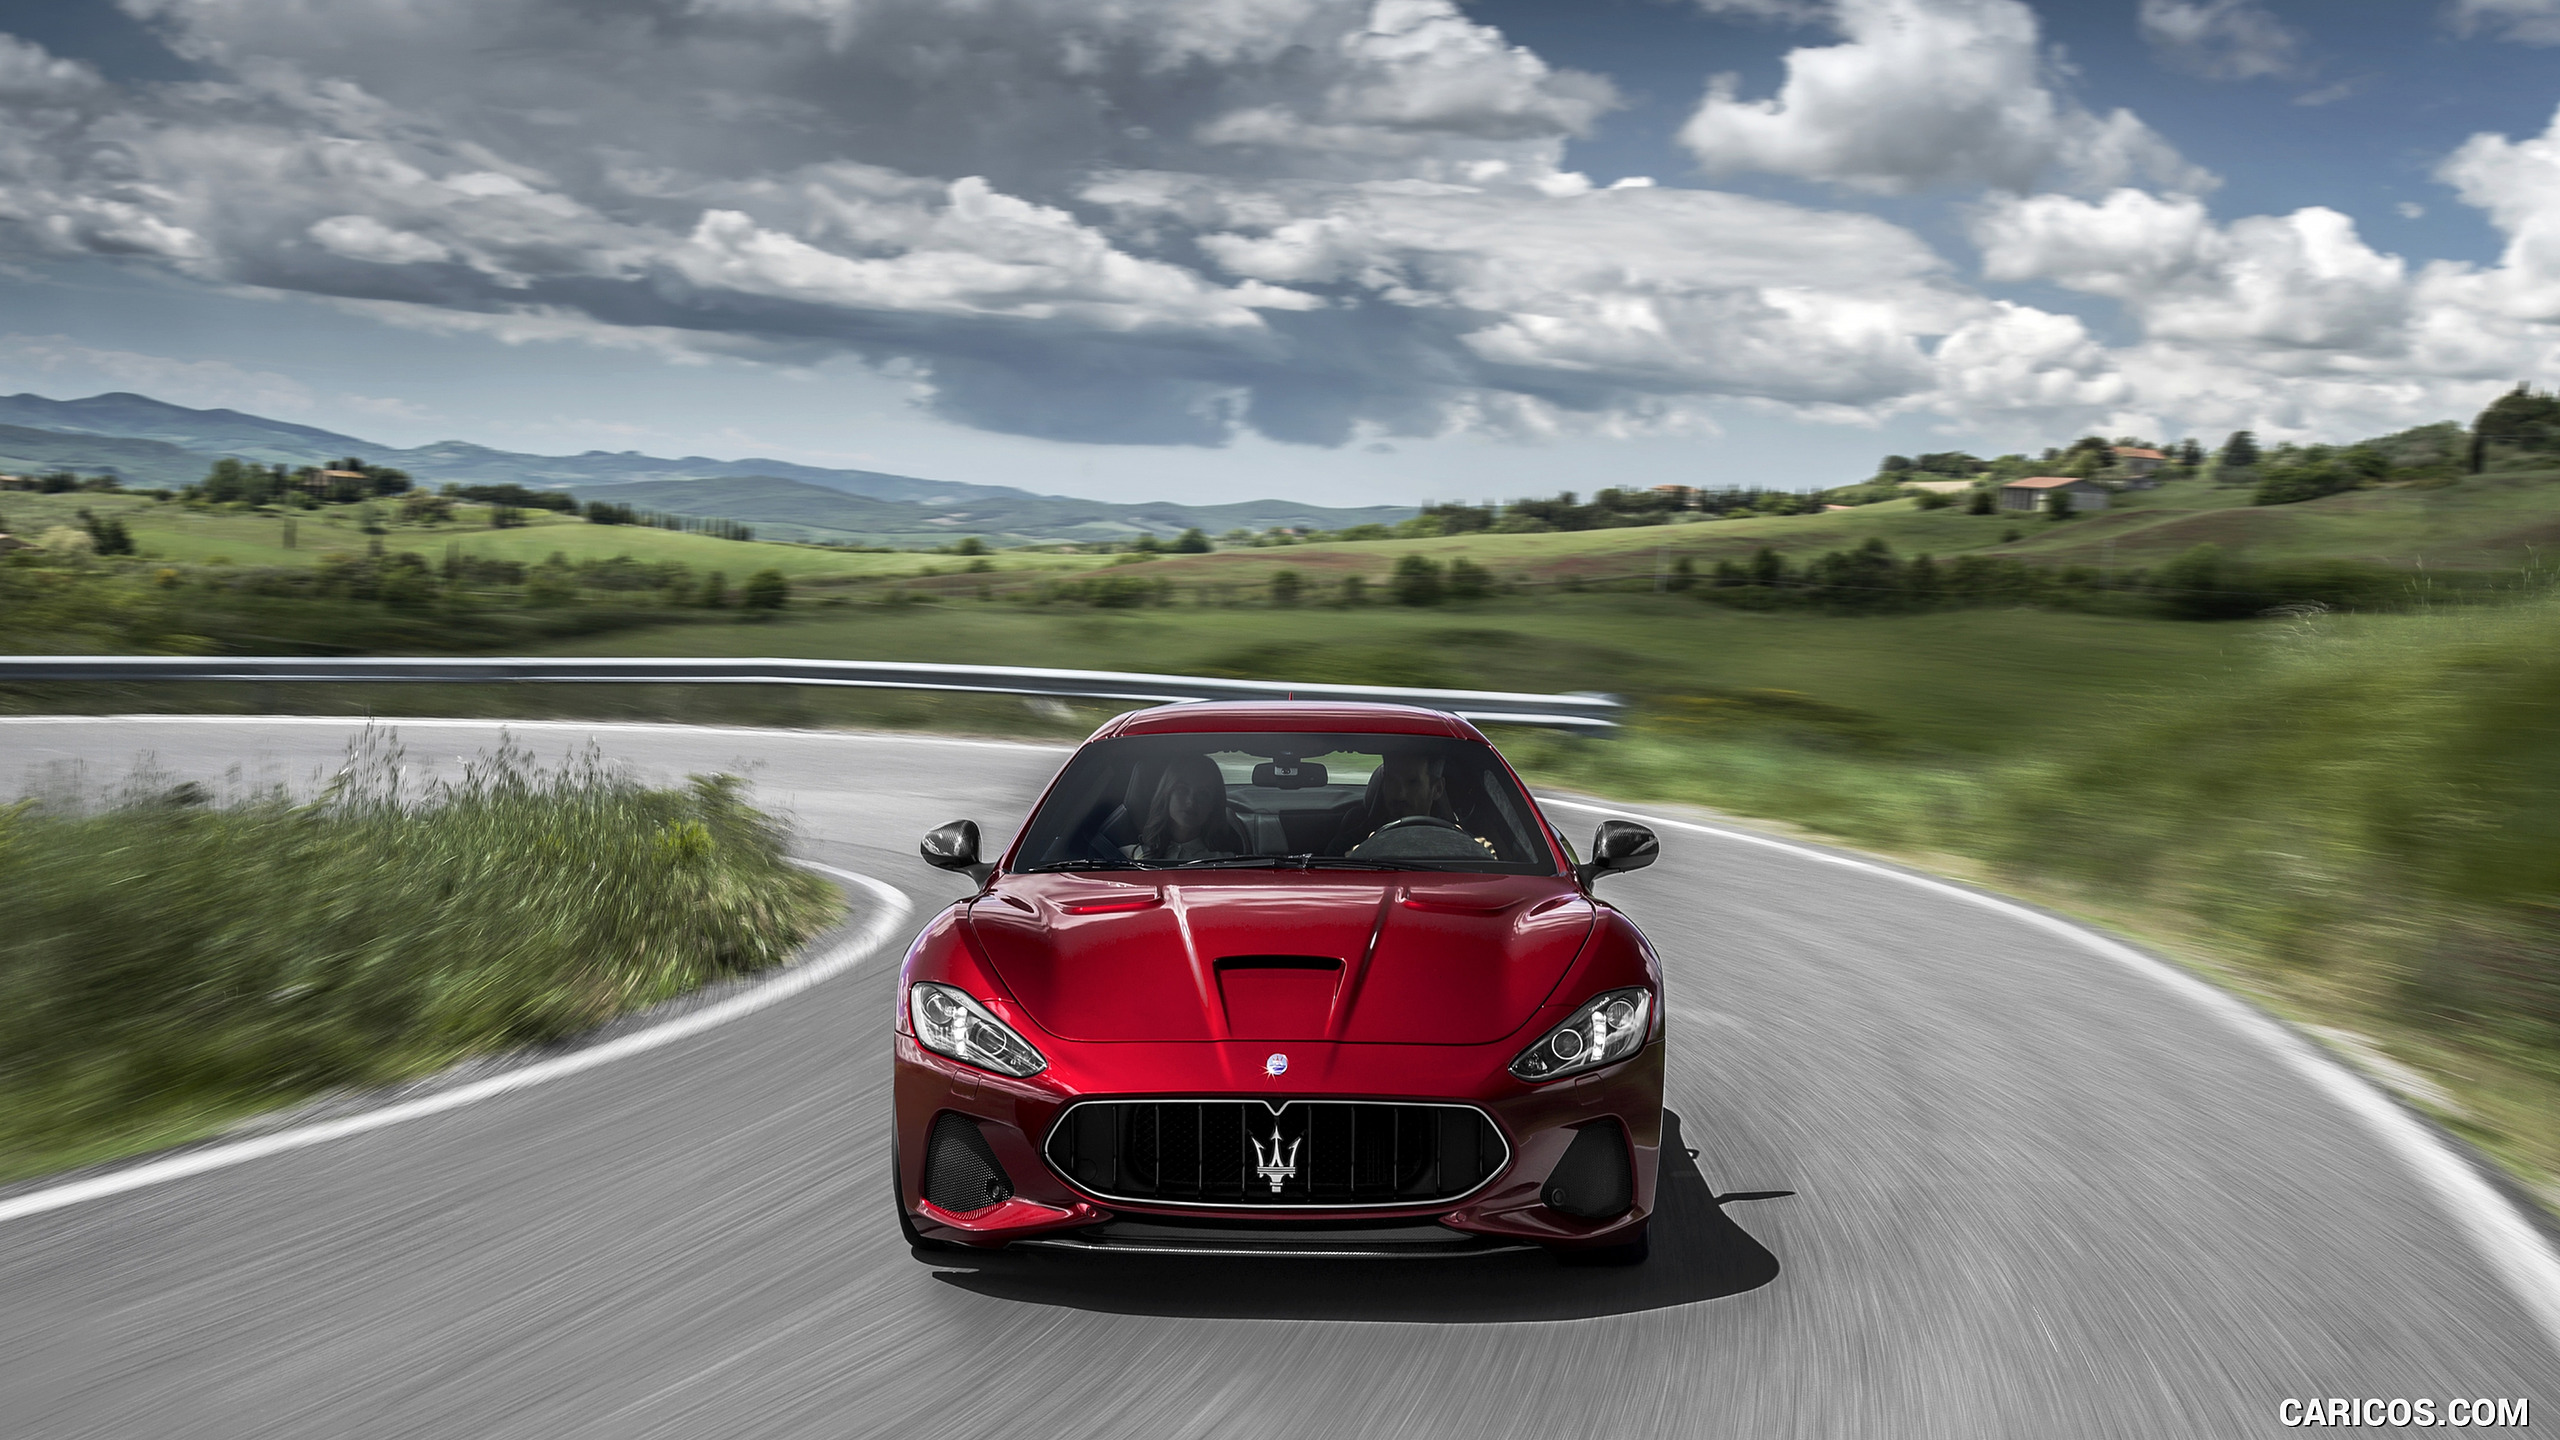 2018 Maserati GranTurismo MC Sport Line - Front, #1 of 22